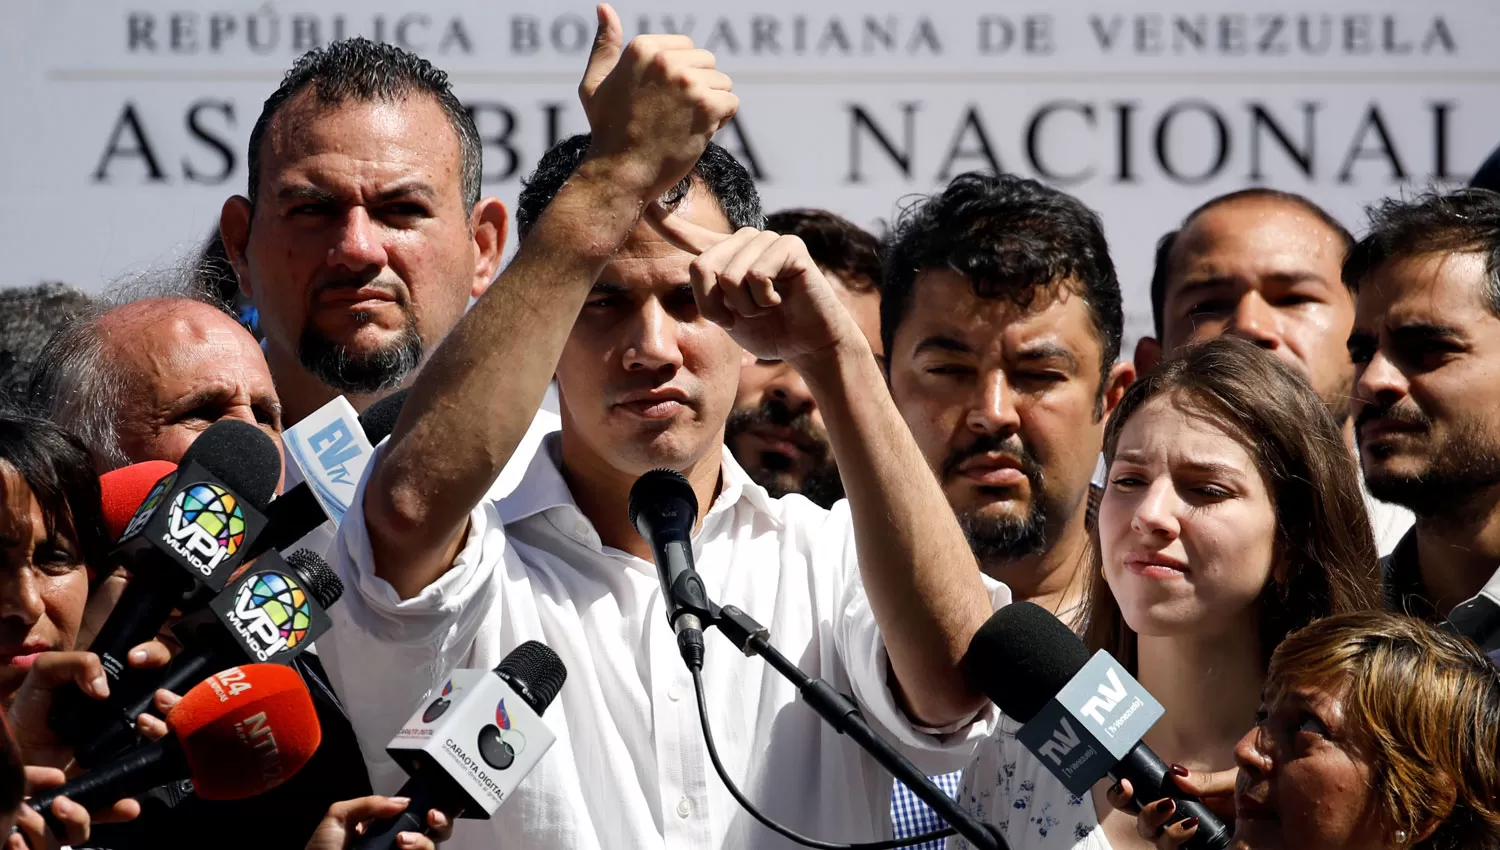 EN LIBERTAD. Guaidó mostró sus muñecas en una conferencia de prensa organizada en La Guaira.